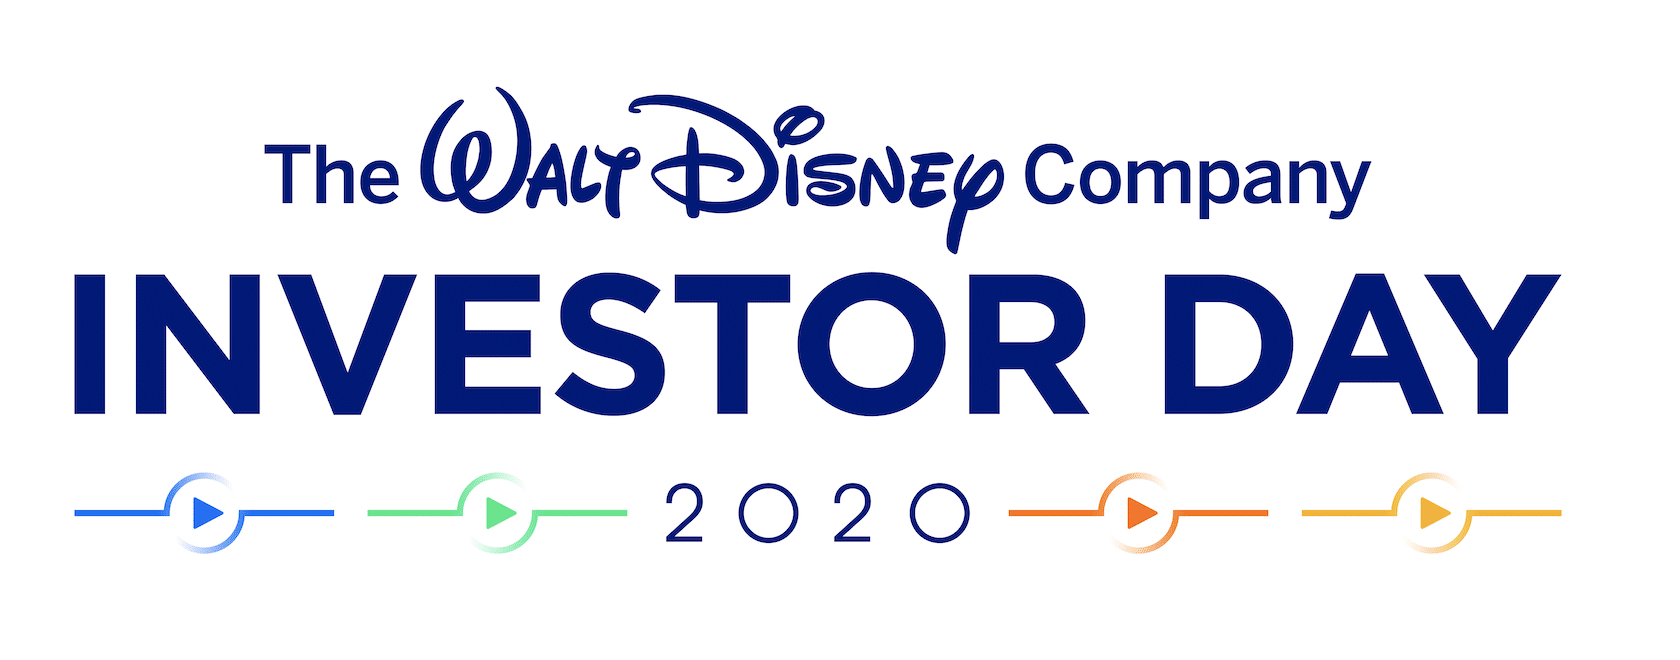 Full Recap of The Walt Disney Company Investor Day 2020 Announcements